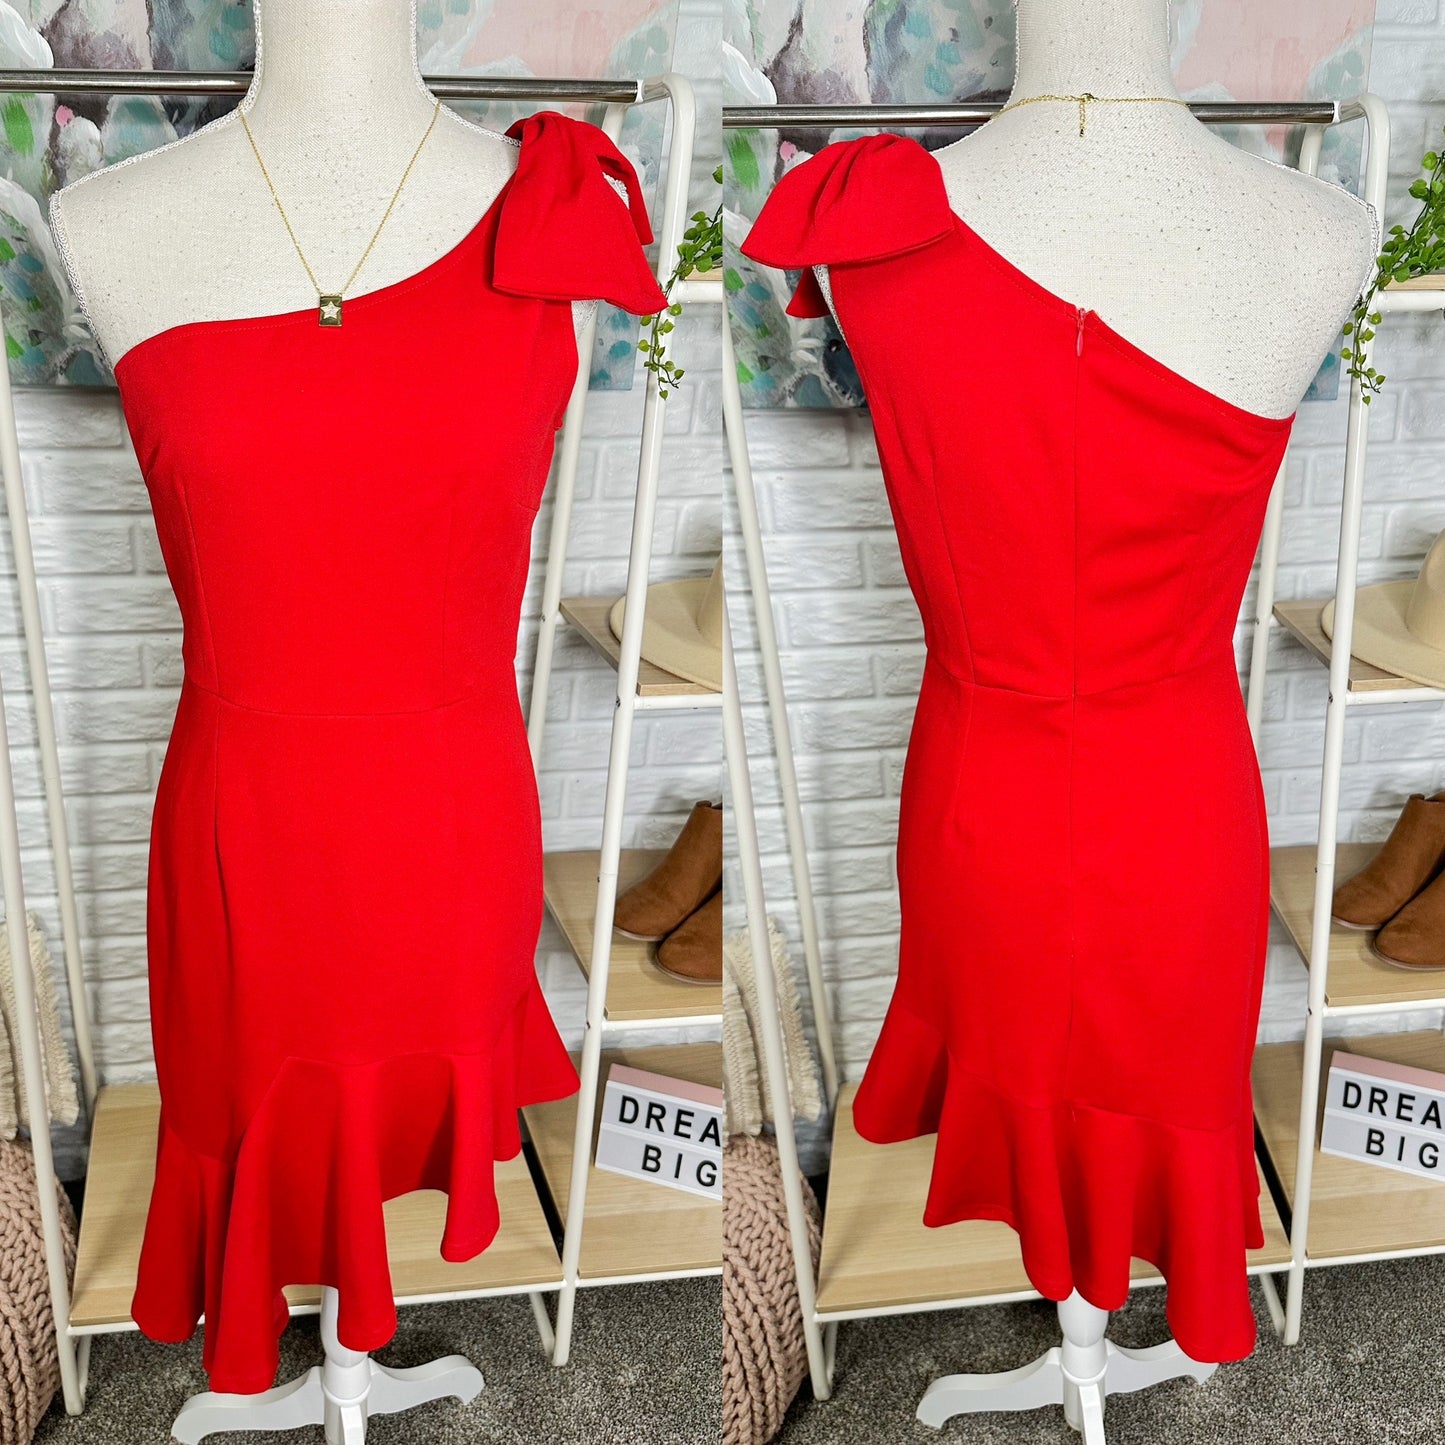 BTFBM New Red One Shoulder Dress Size Medium